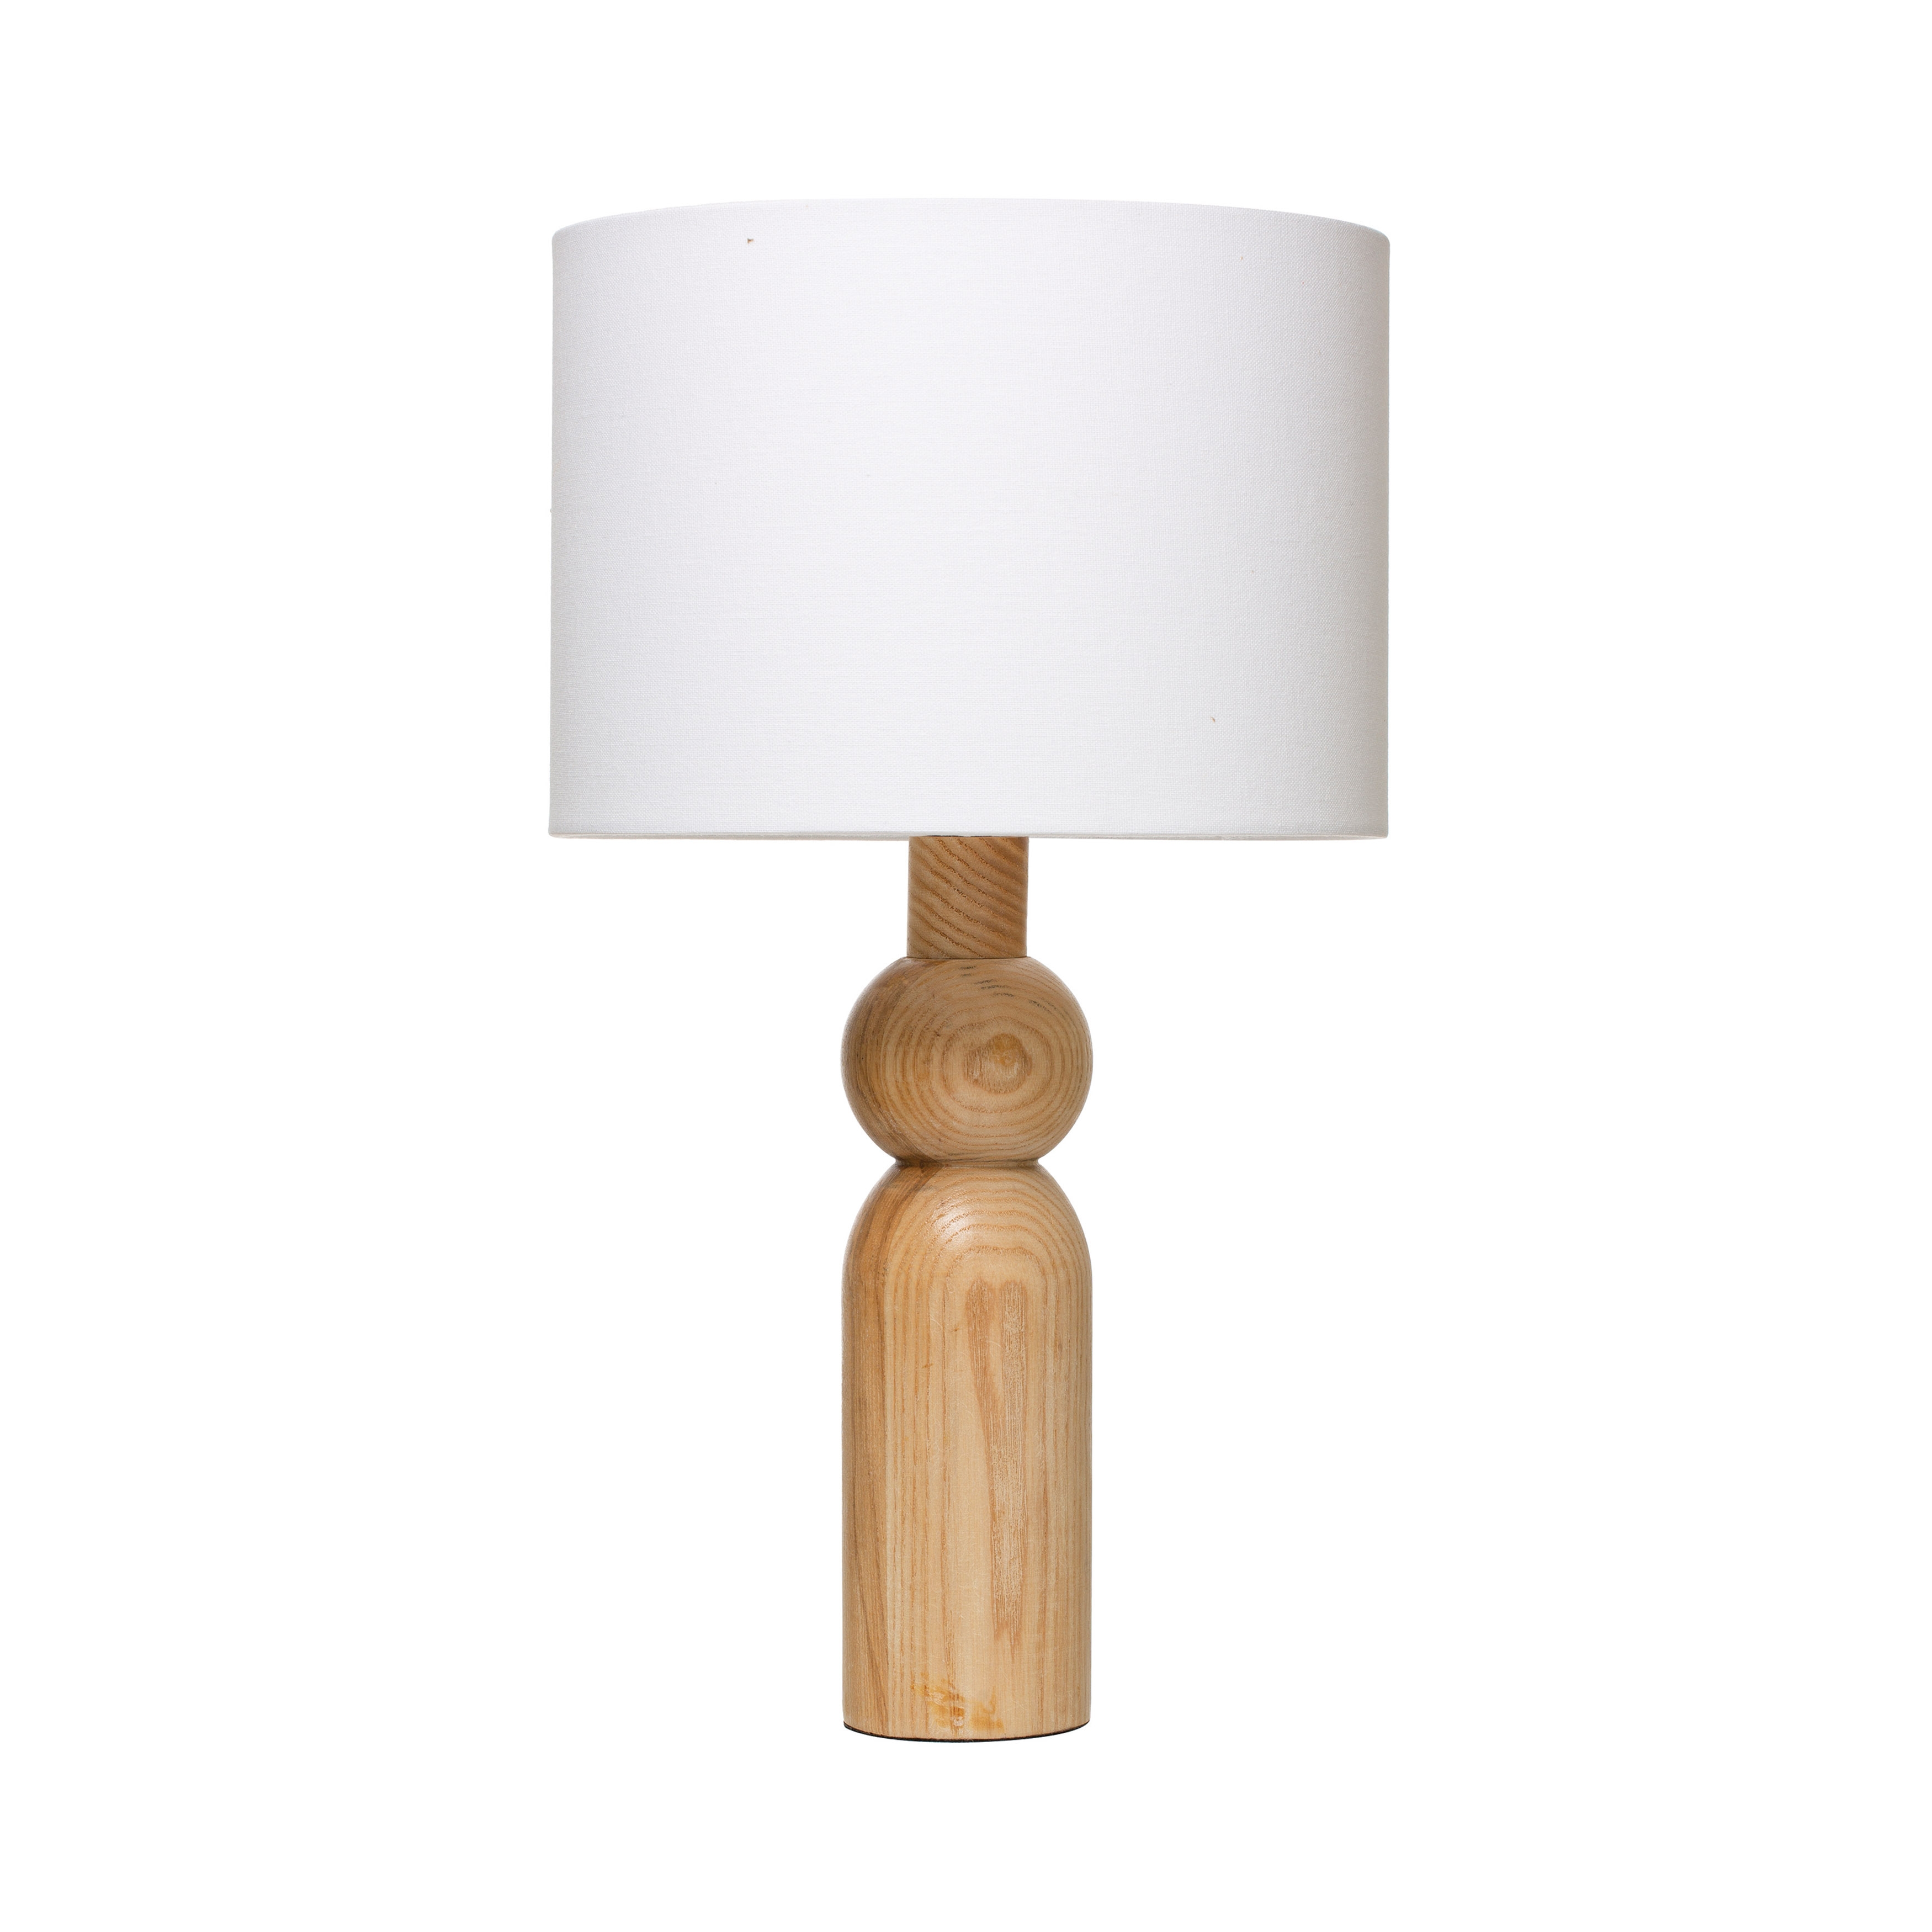 Wood Table Lamp, Natural - Image 0